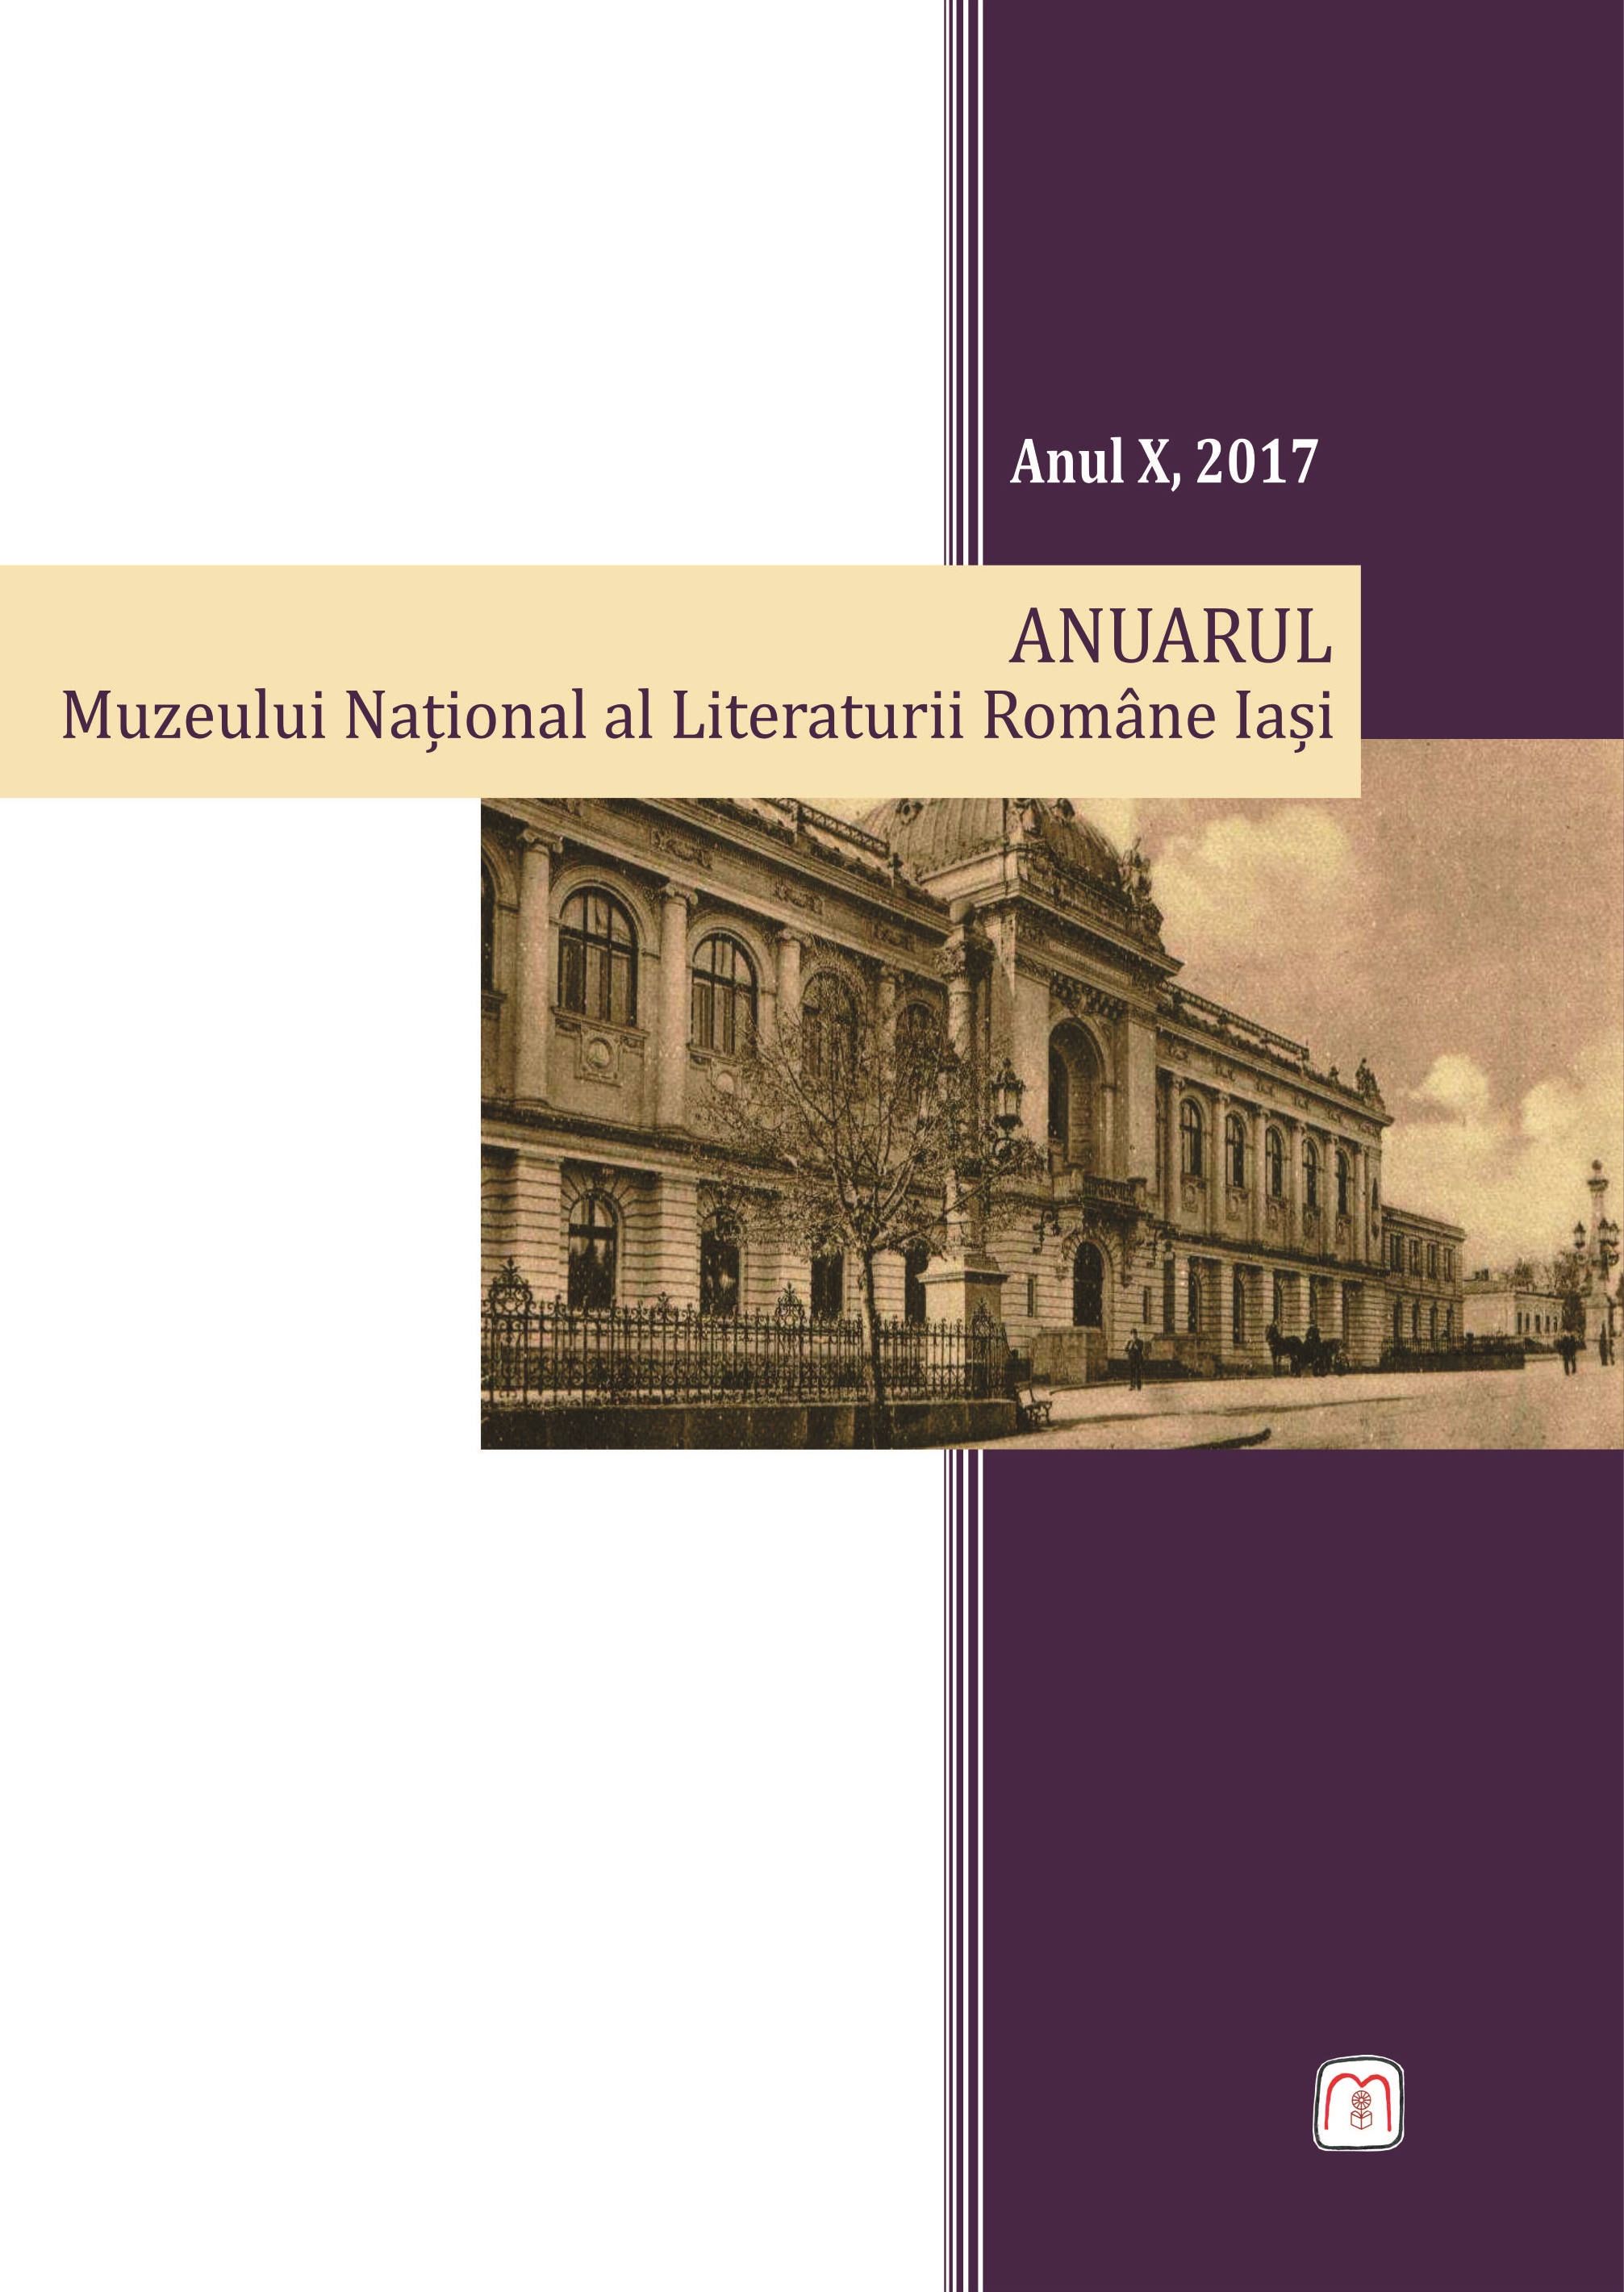 The Establishment and the Evolution of Păcurari Neighbourhood Cover Image